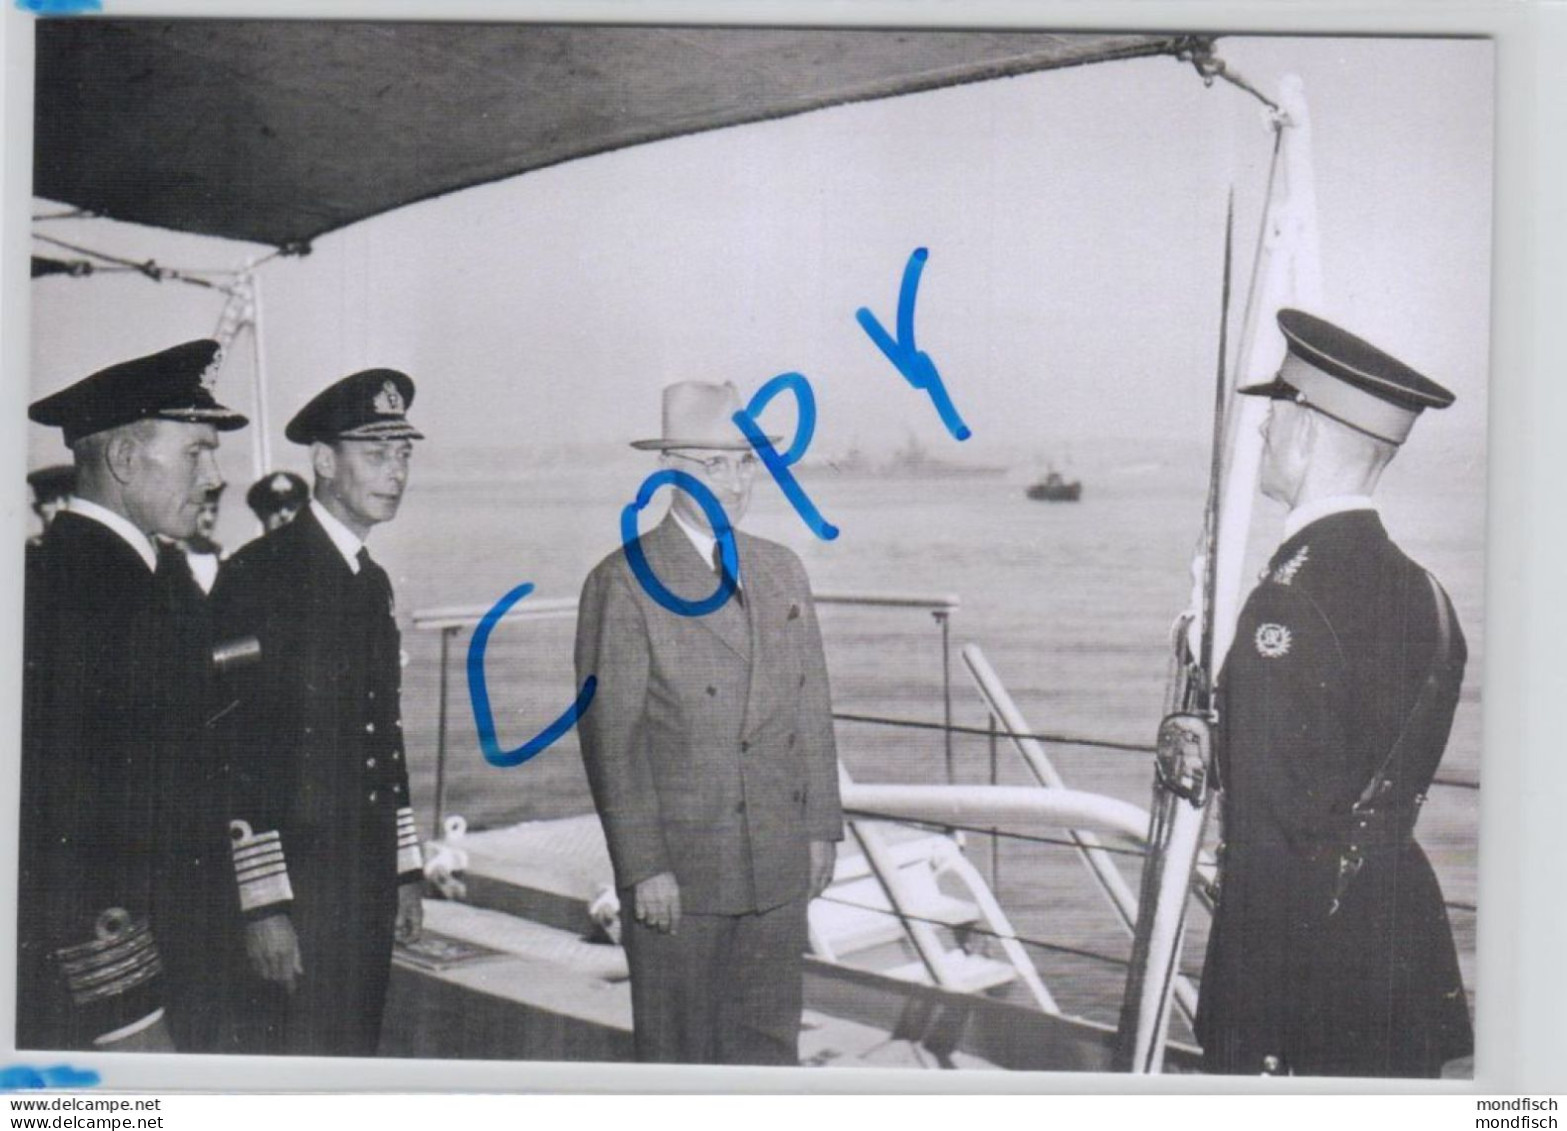 REPRO - King George VI And President Harry S. Truman - U.S.S. Augusta - Königshäuser